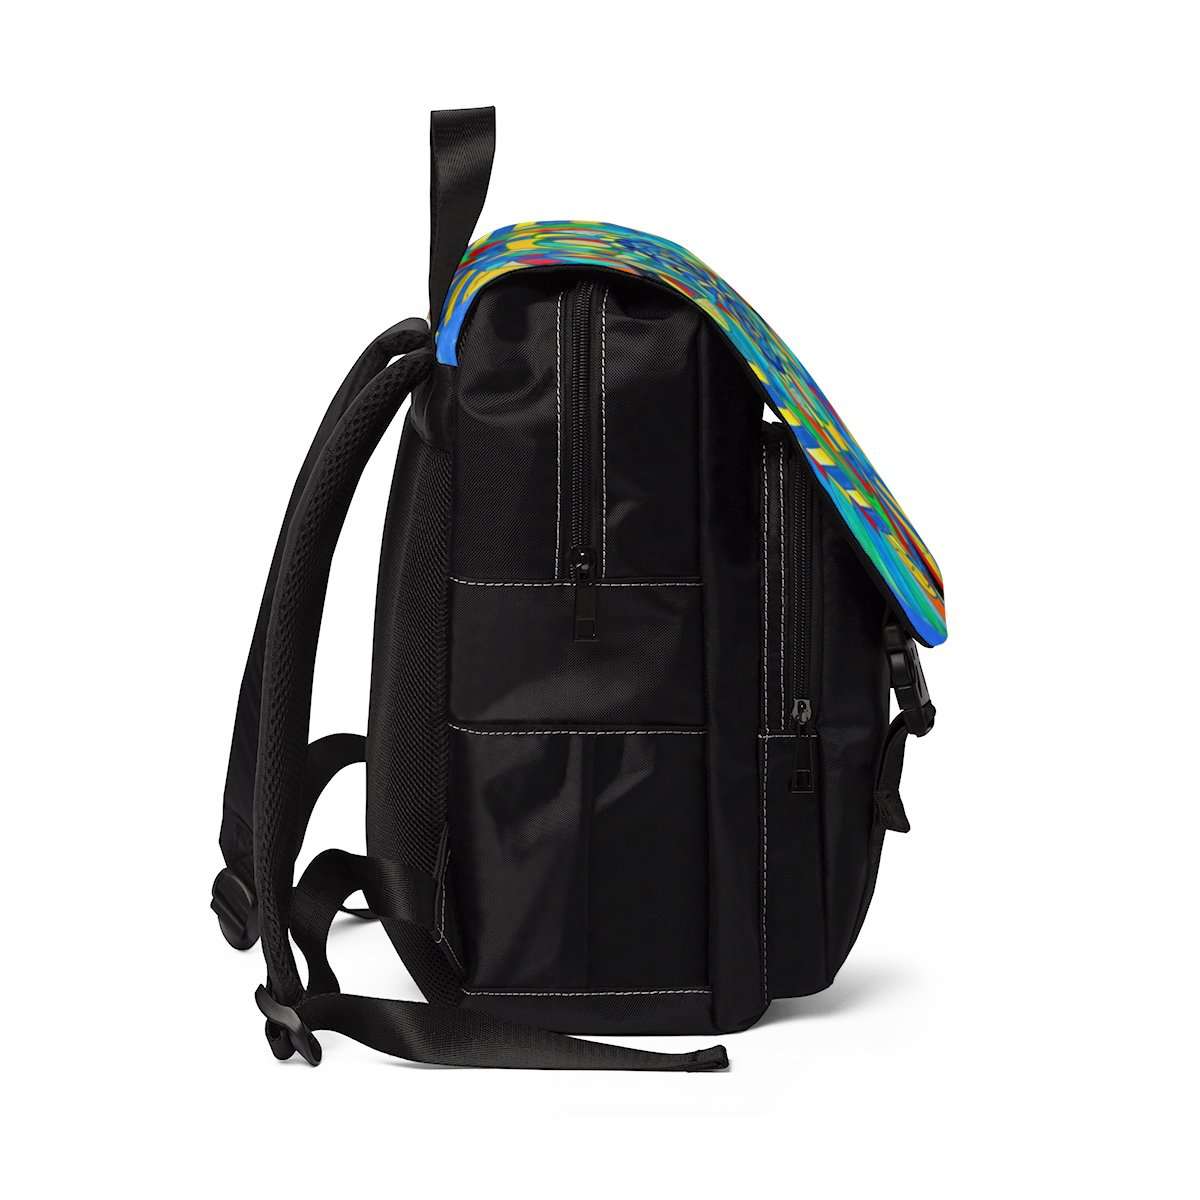 shop-professional-and-licensed-ascended-reunion-unisex-casual-shoulder-backpack-online-now_1.jpg